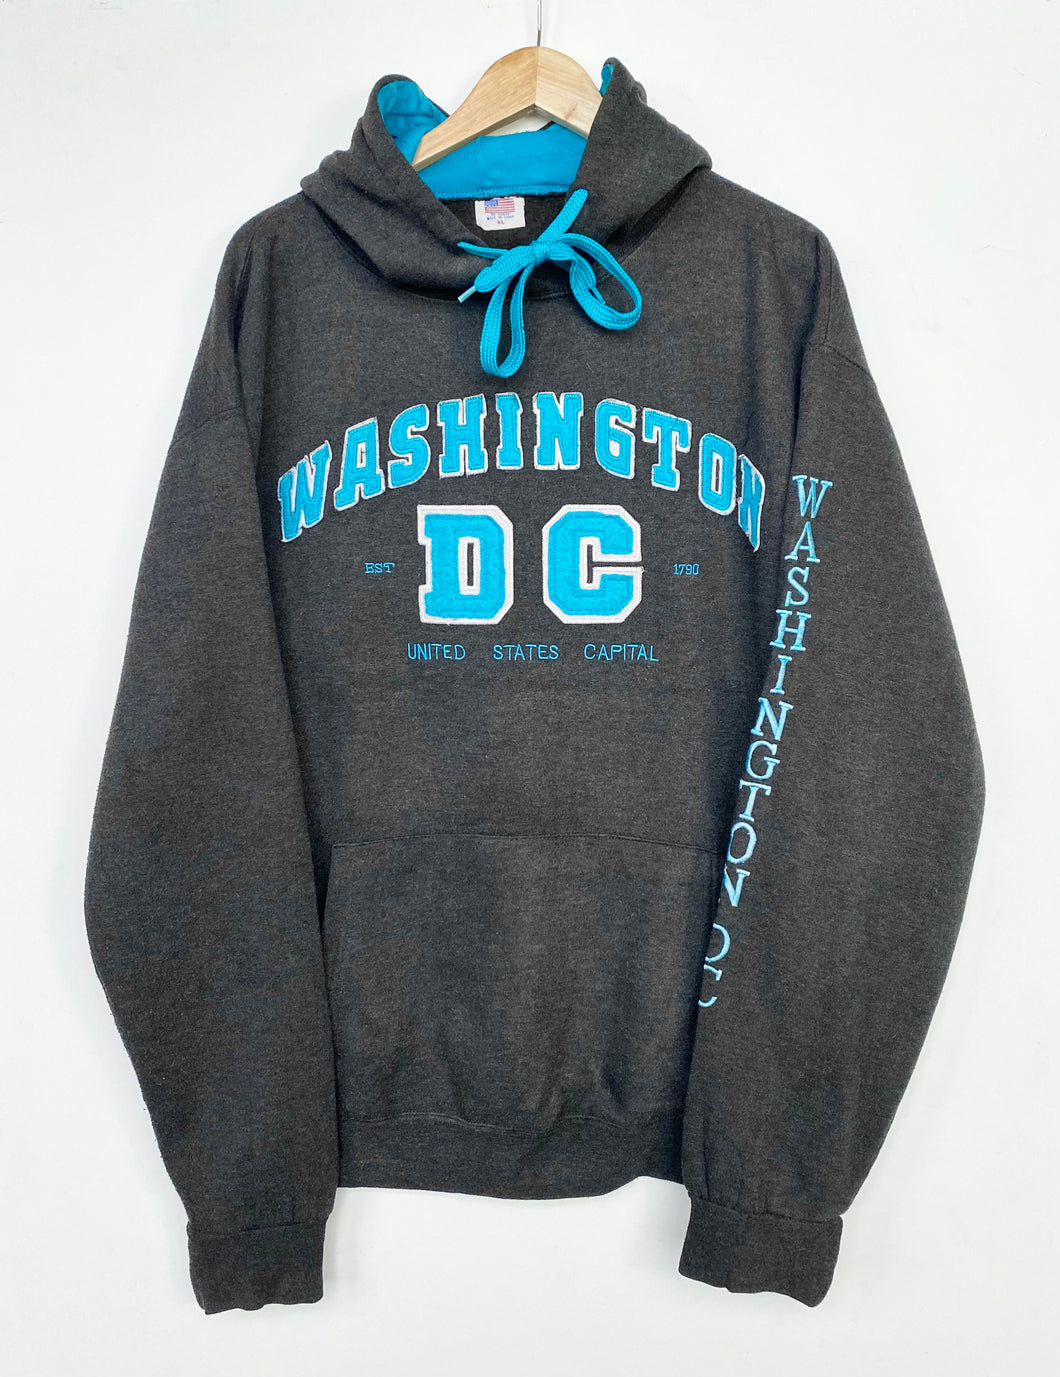 Washington American College Hoodie (XL)